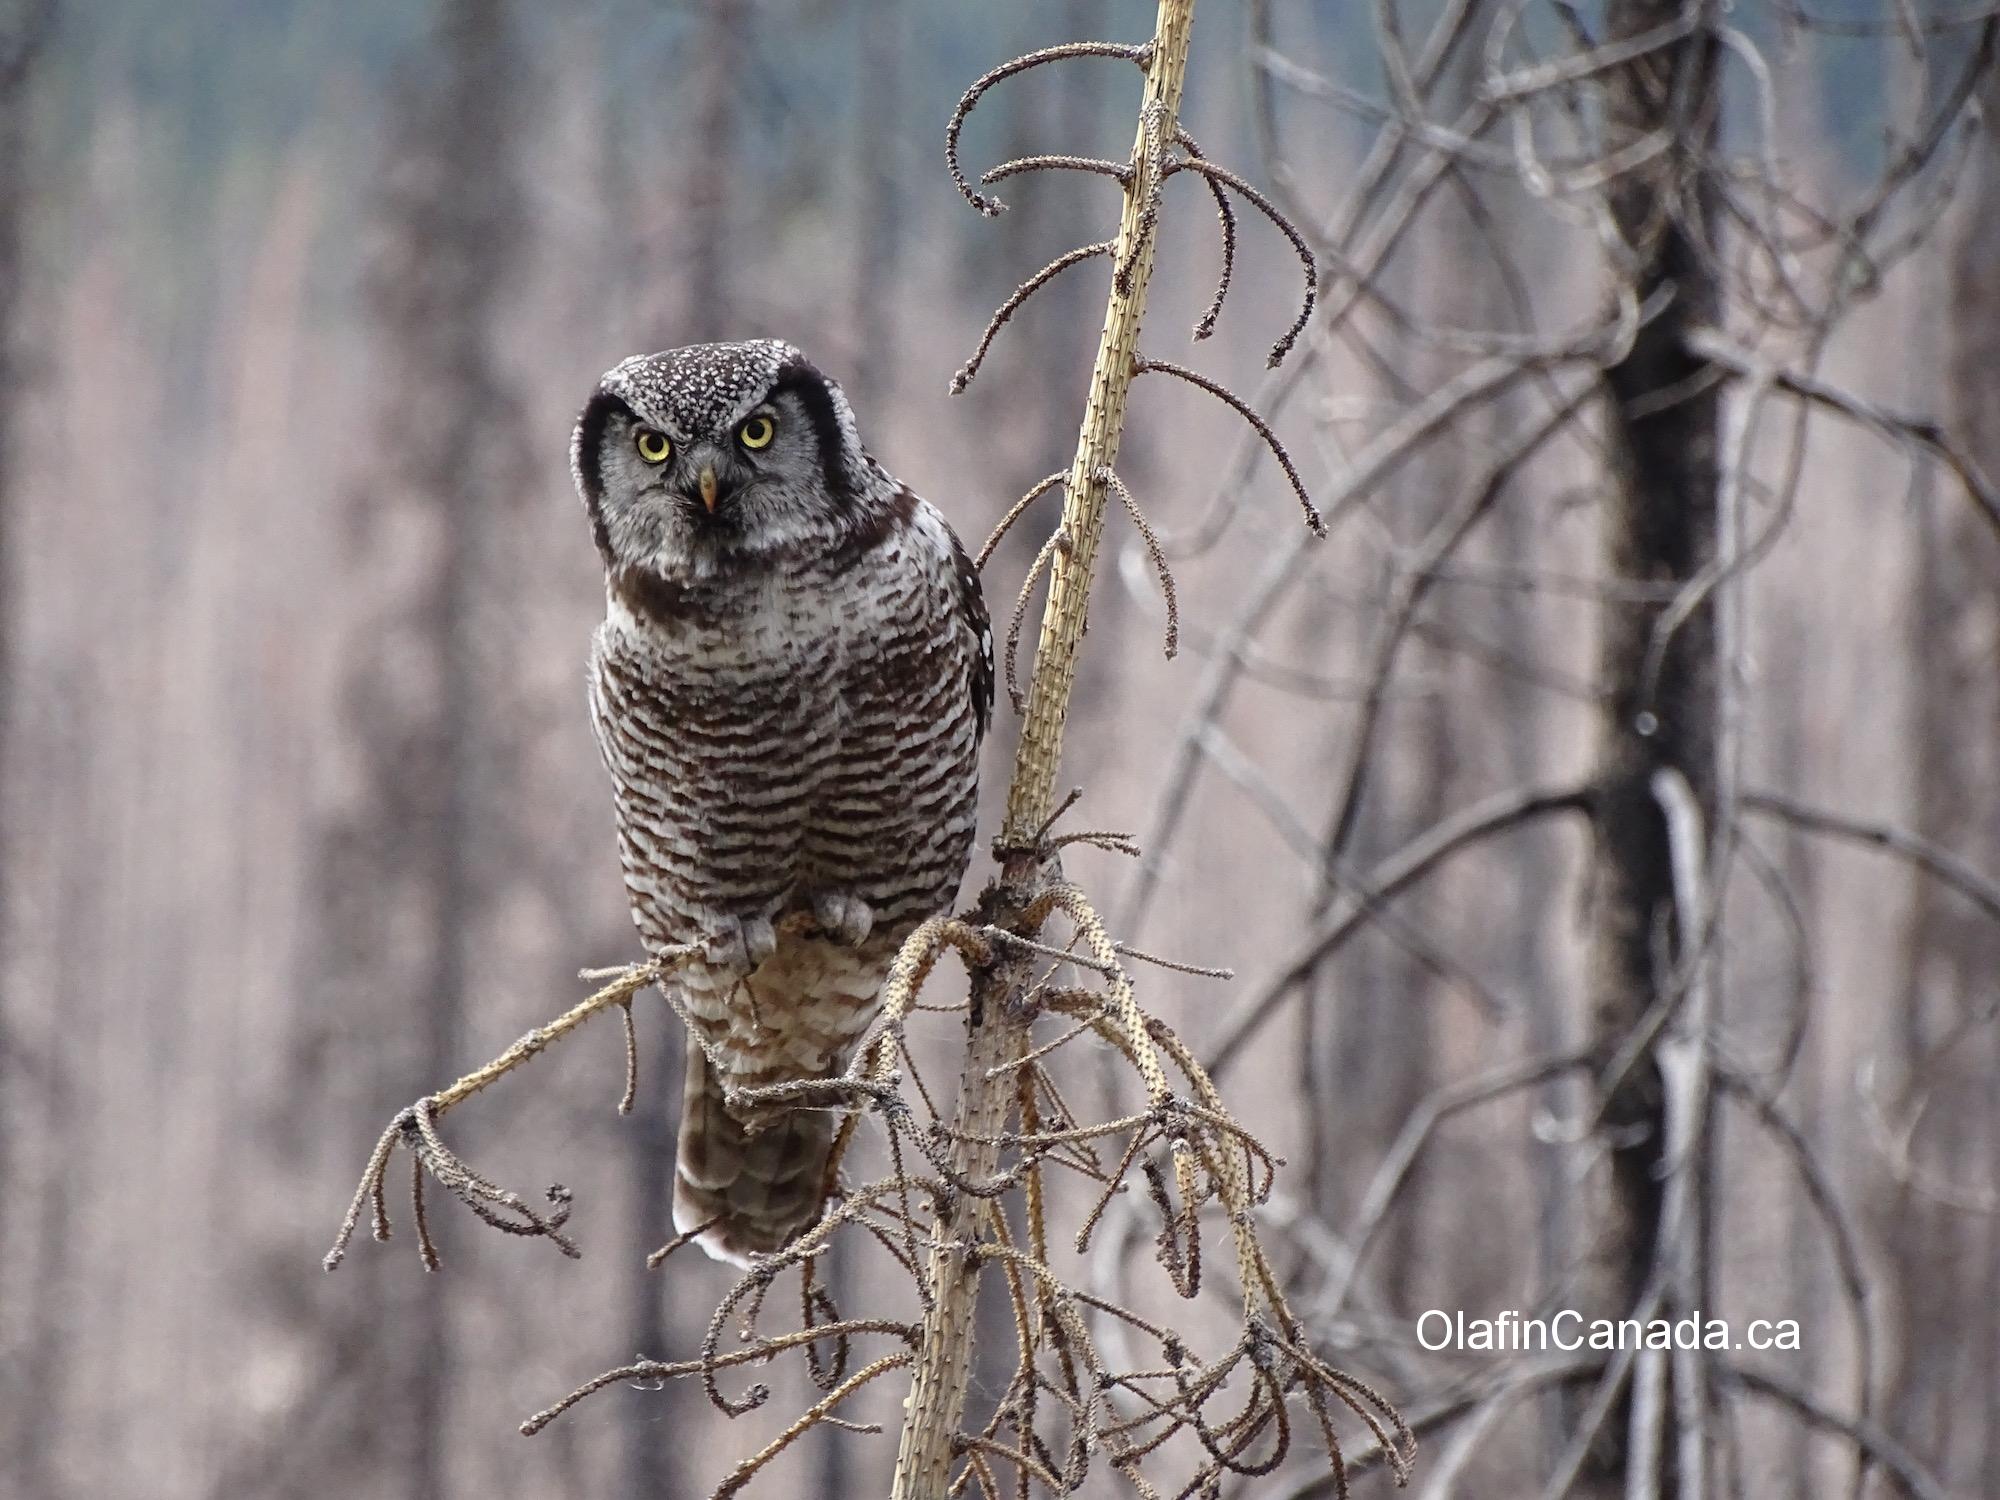 Northern hawk owl at Medicine Lake, Jasper Alberta #olafincanada #alberta #rockies #jasper #wildlife #owl